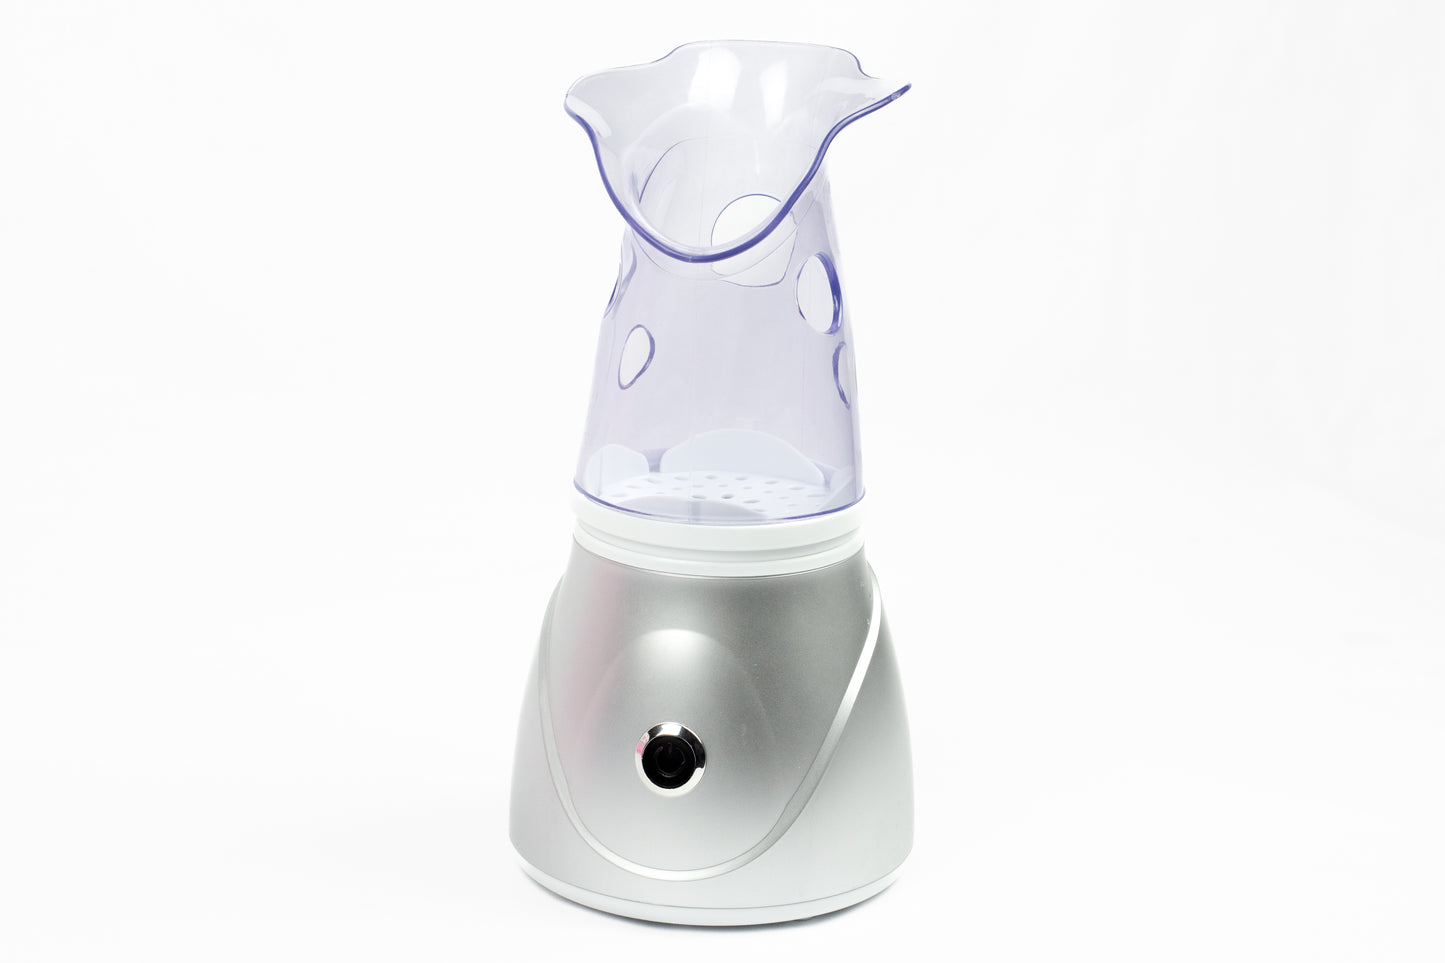 LifeCare Portable Steam Inhaler and Facial Sauna 2 in 1 Steamer